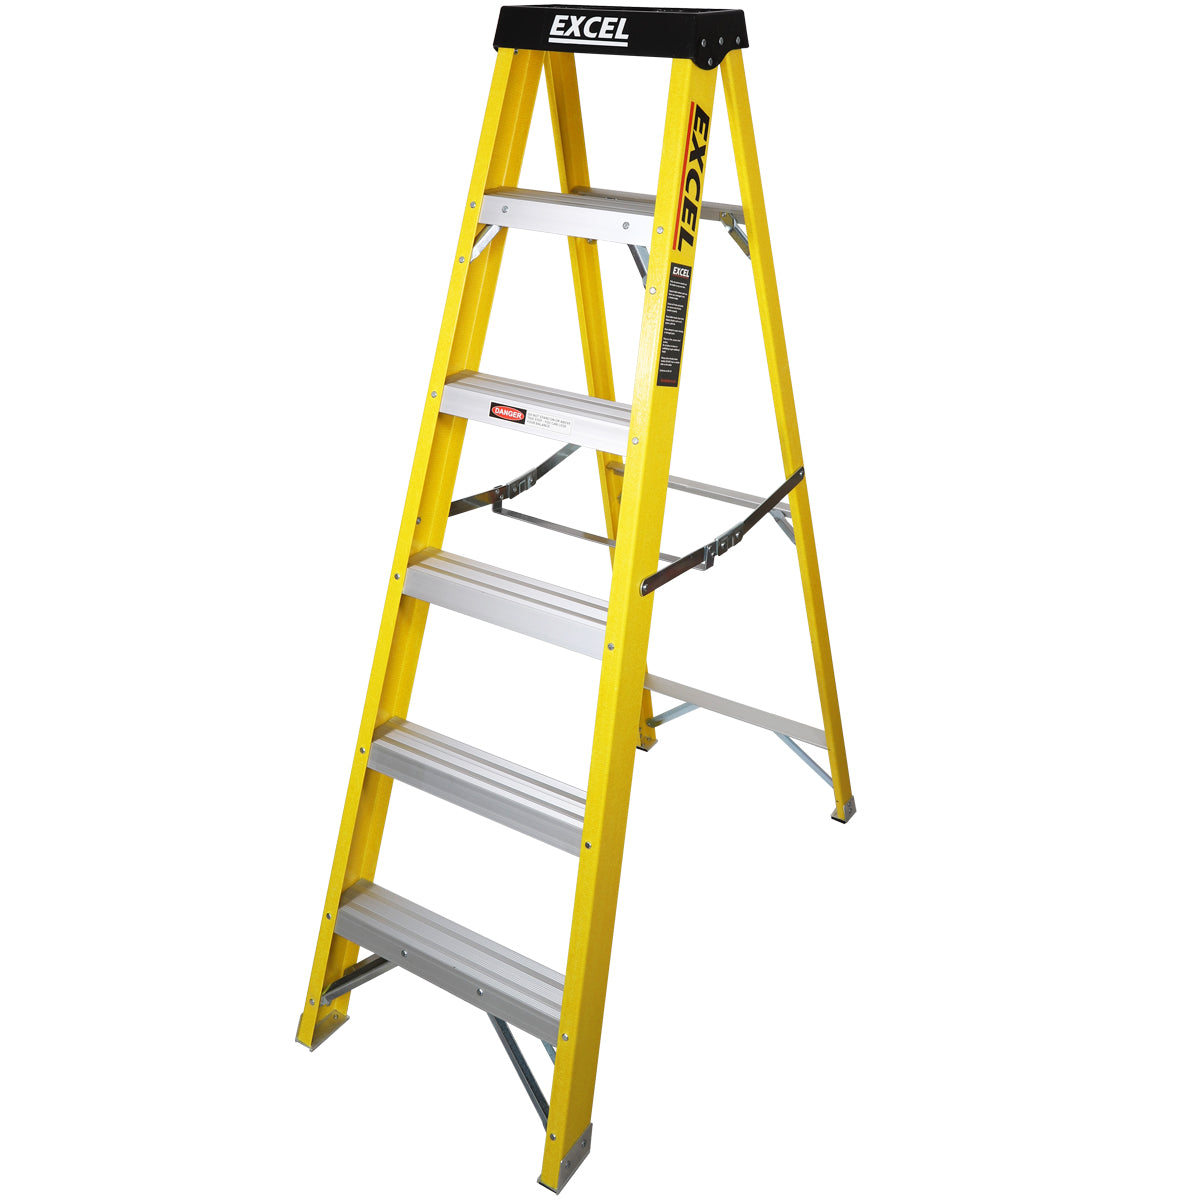 Excel Electricians Fibreglass Step Ladder 6 Tread